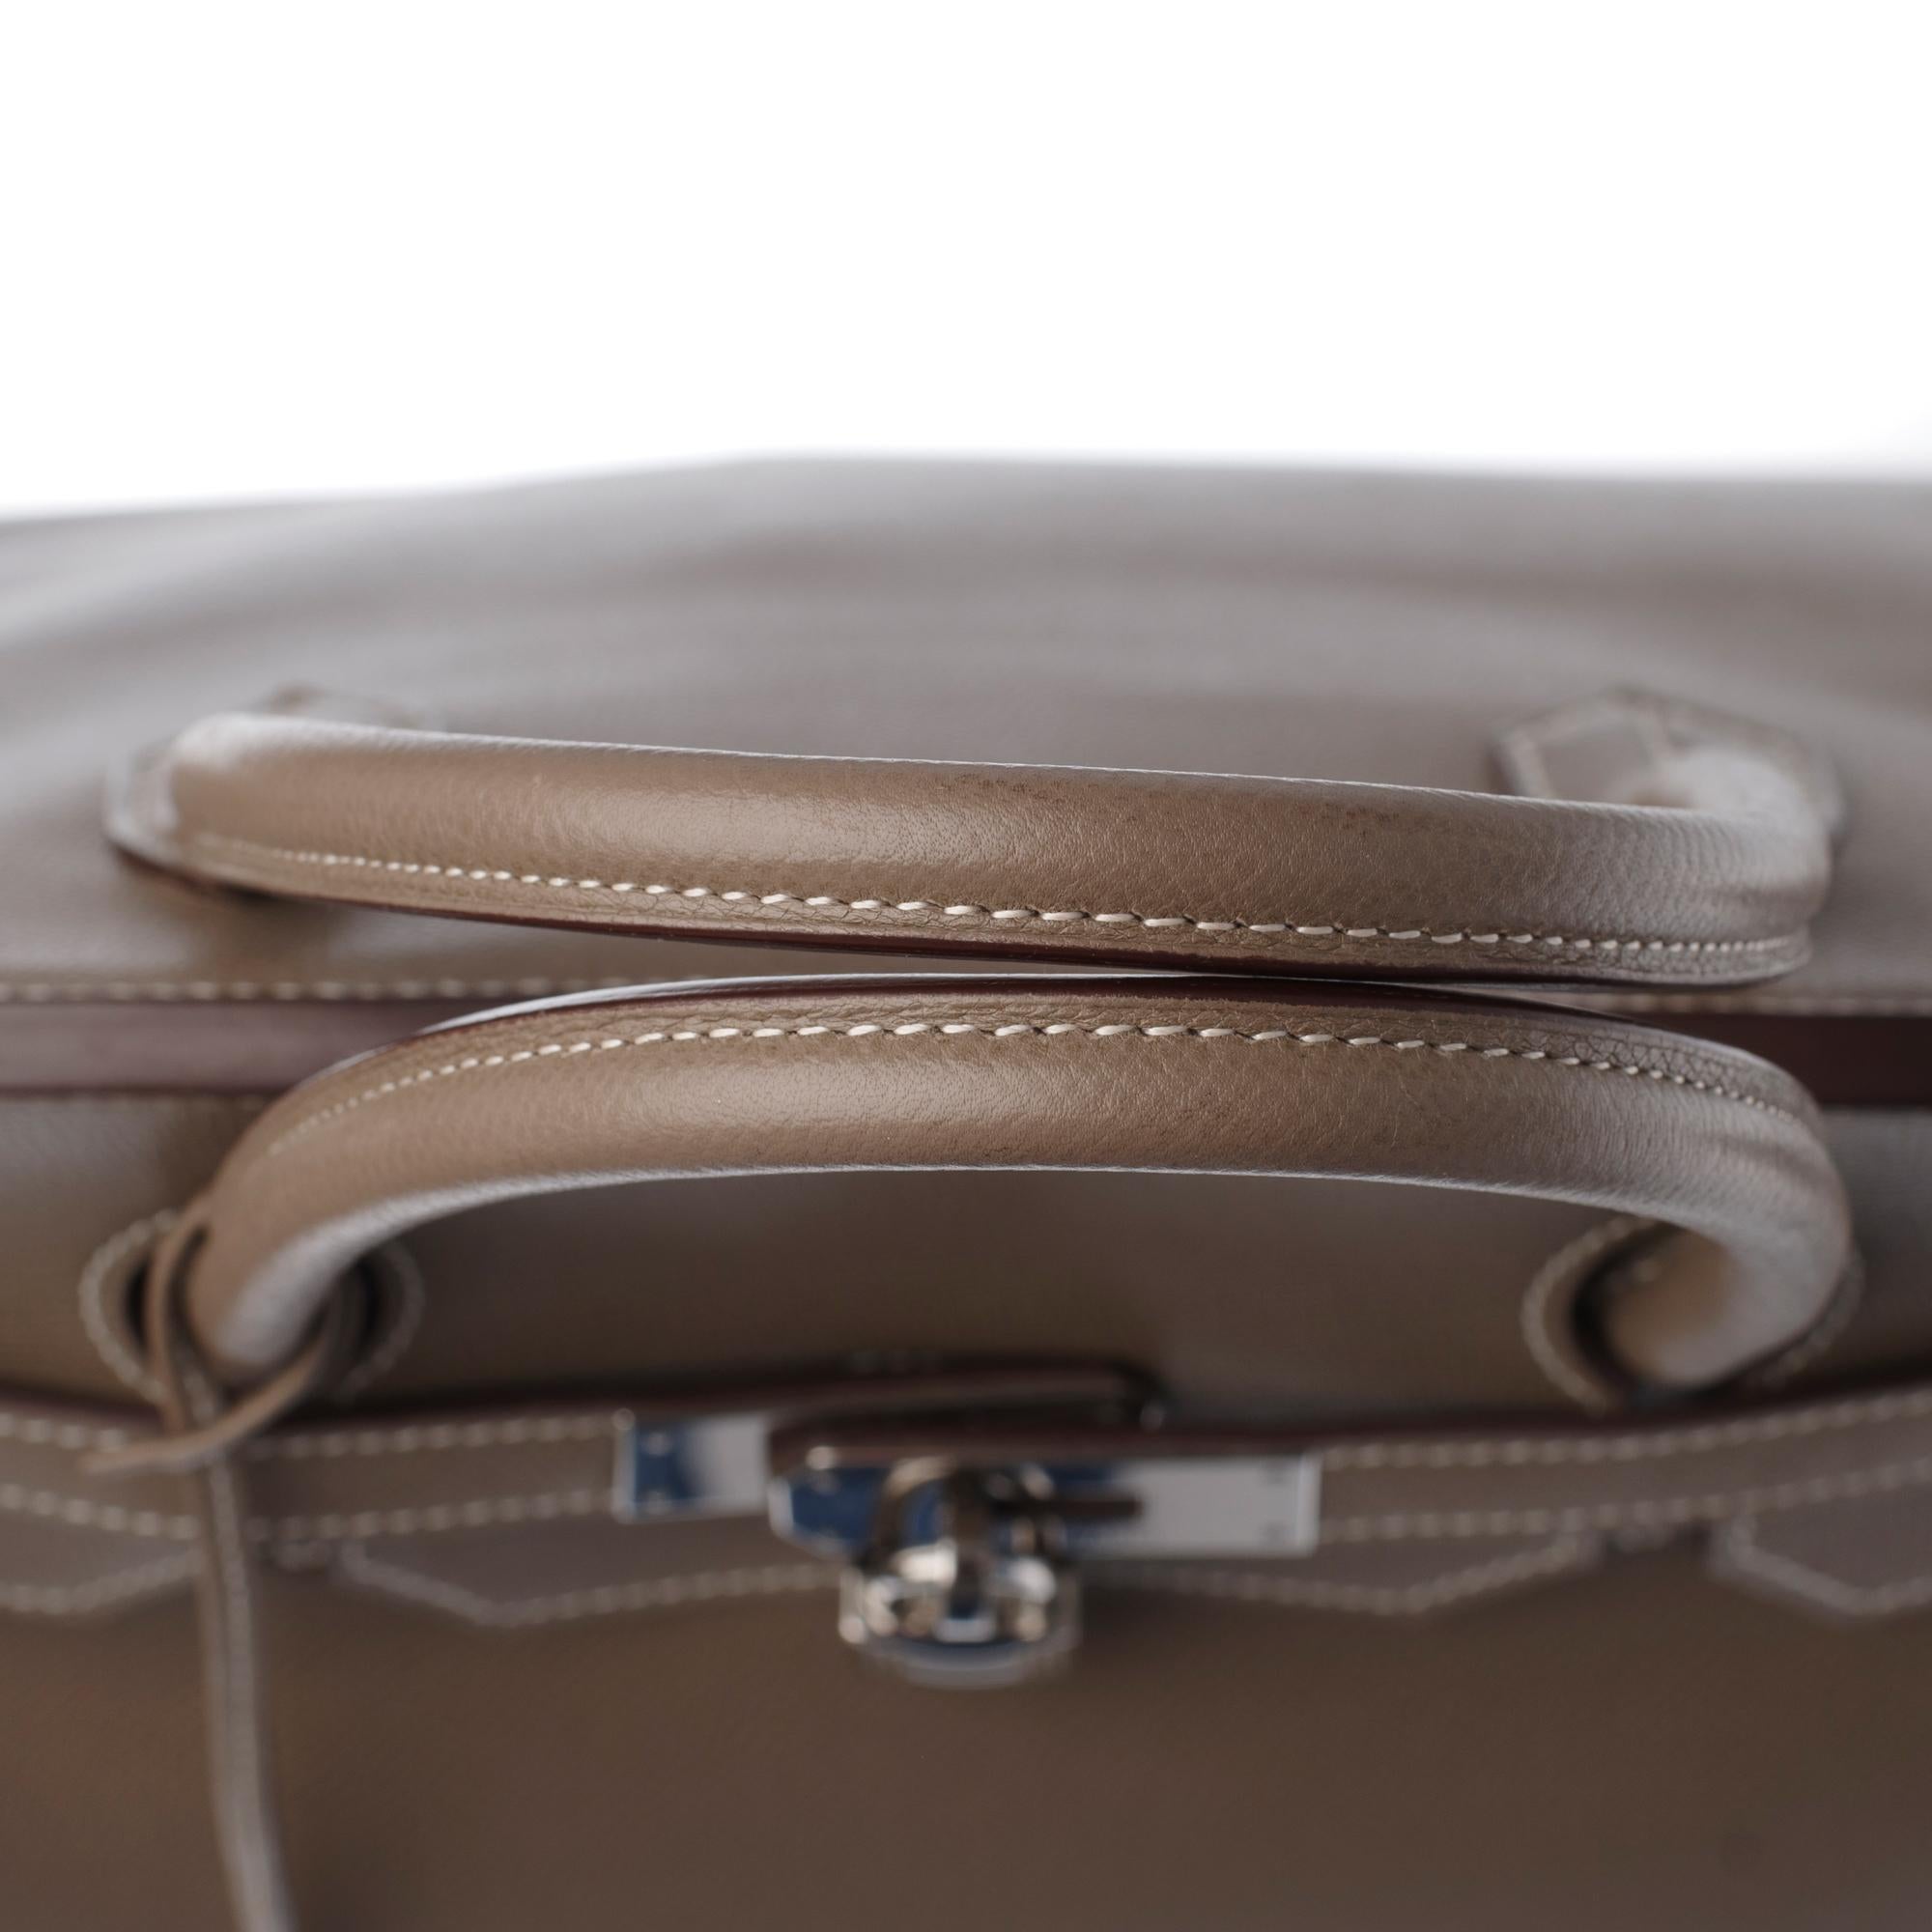 Stunning Hermes Birkin 40cm handbag in Brown Togo leather with gold hardware 4